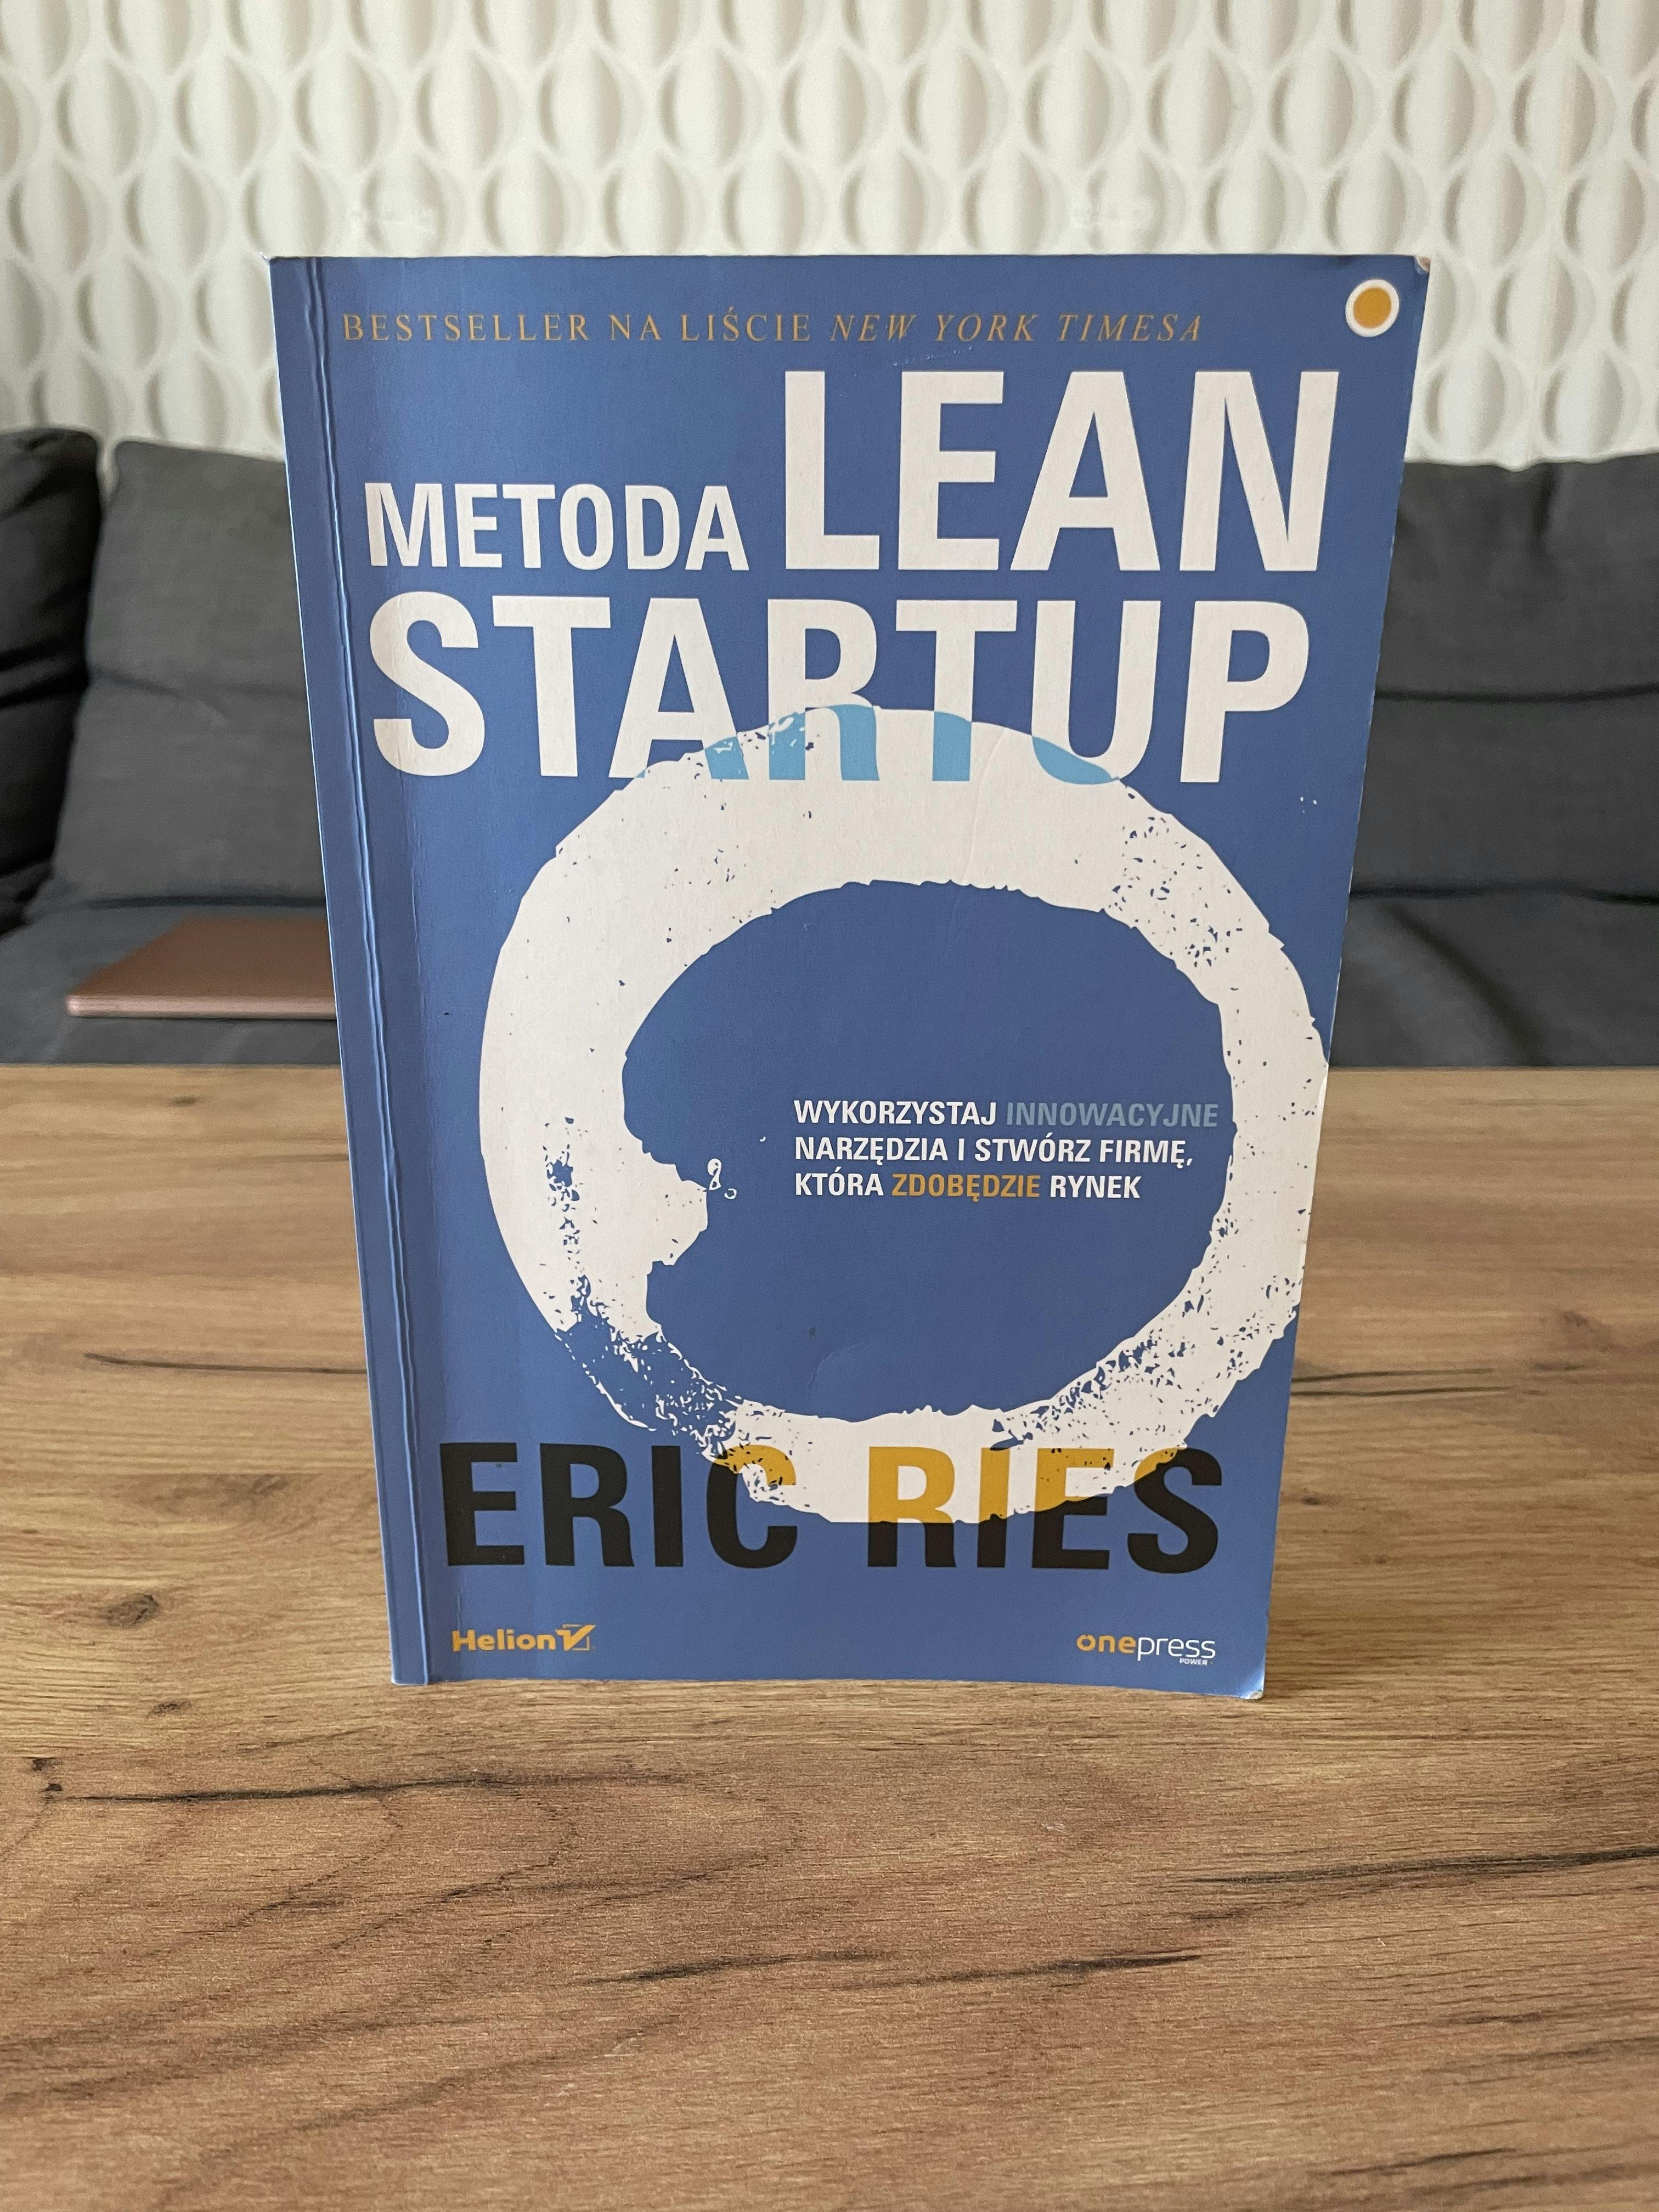 Picture of Książka "Metoda Lean Startup". Autor: Eric Ries